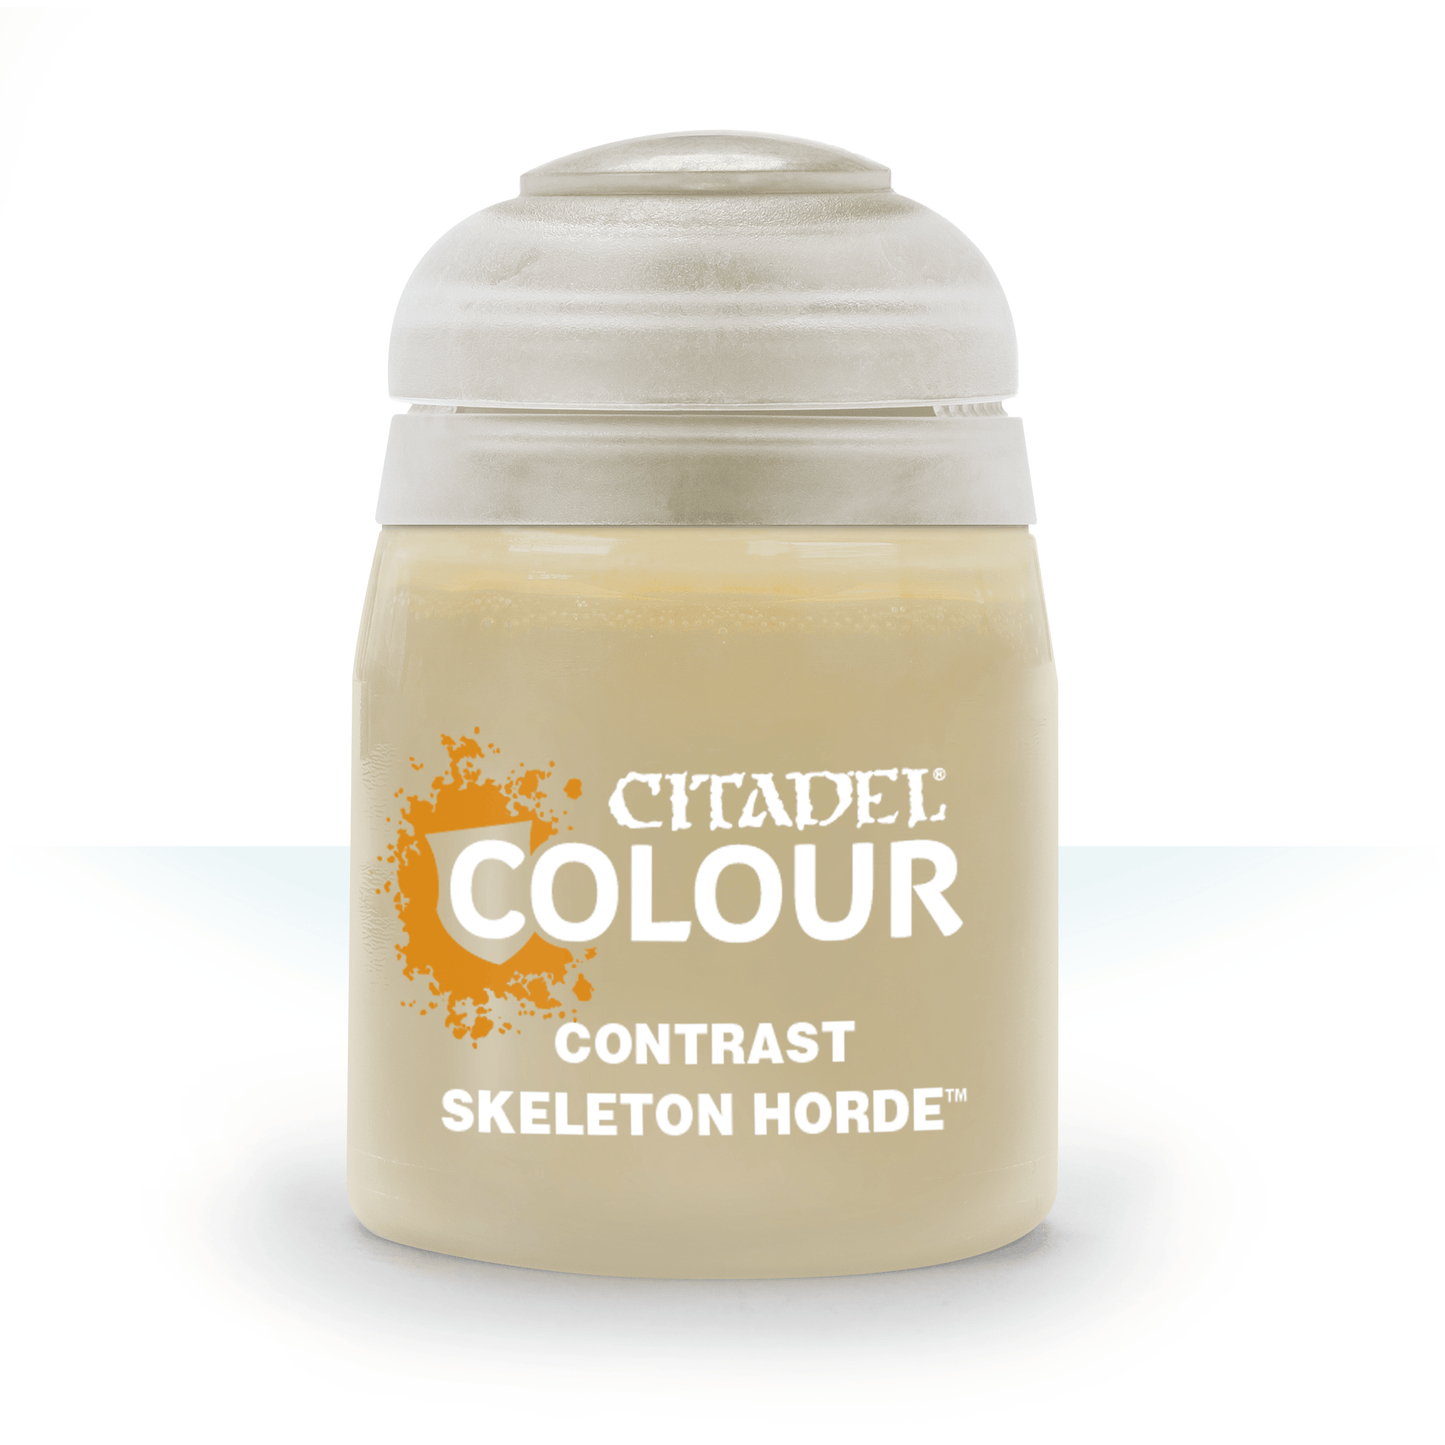 Citadel Colour - Skeleton Horde Contrast Paint